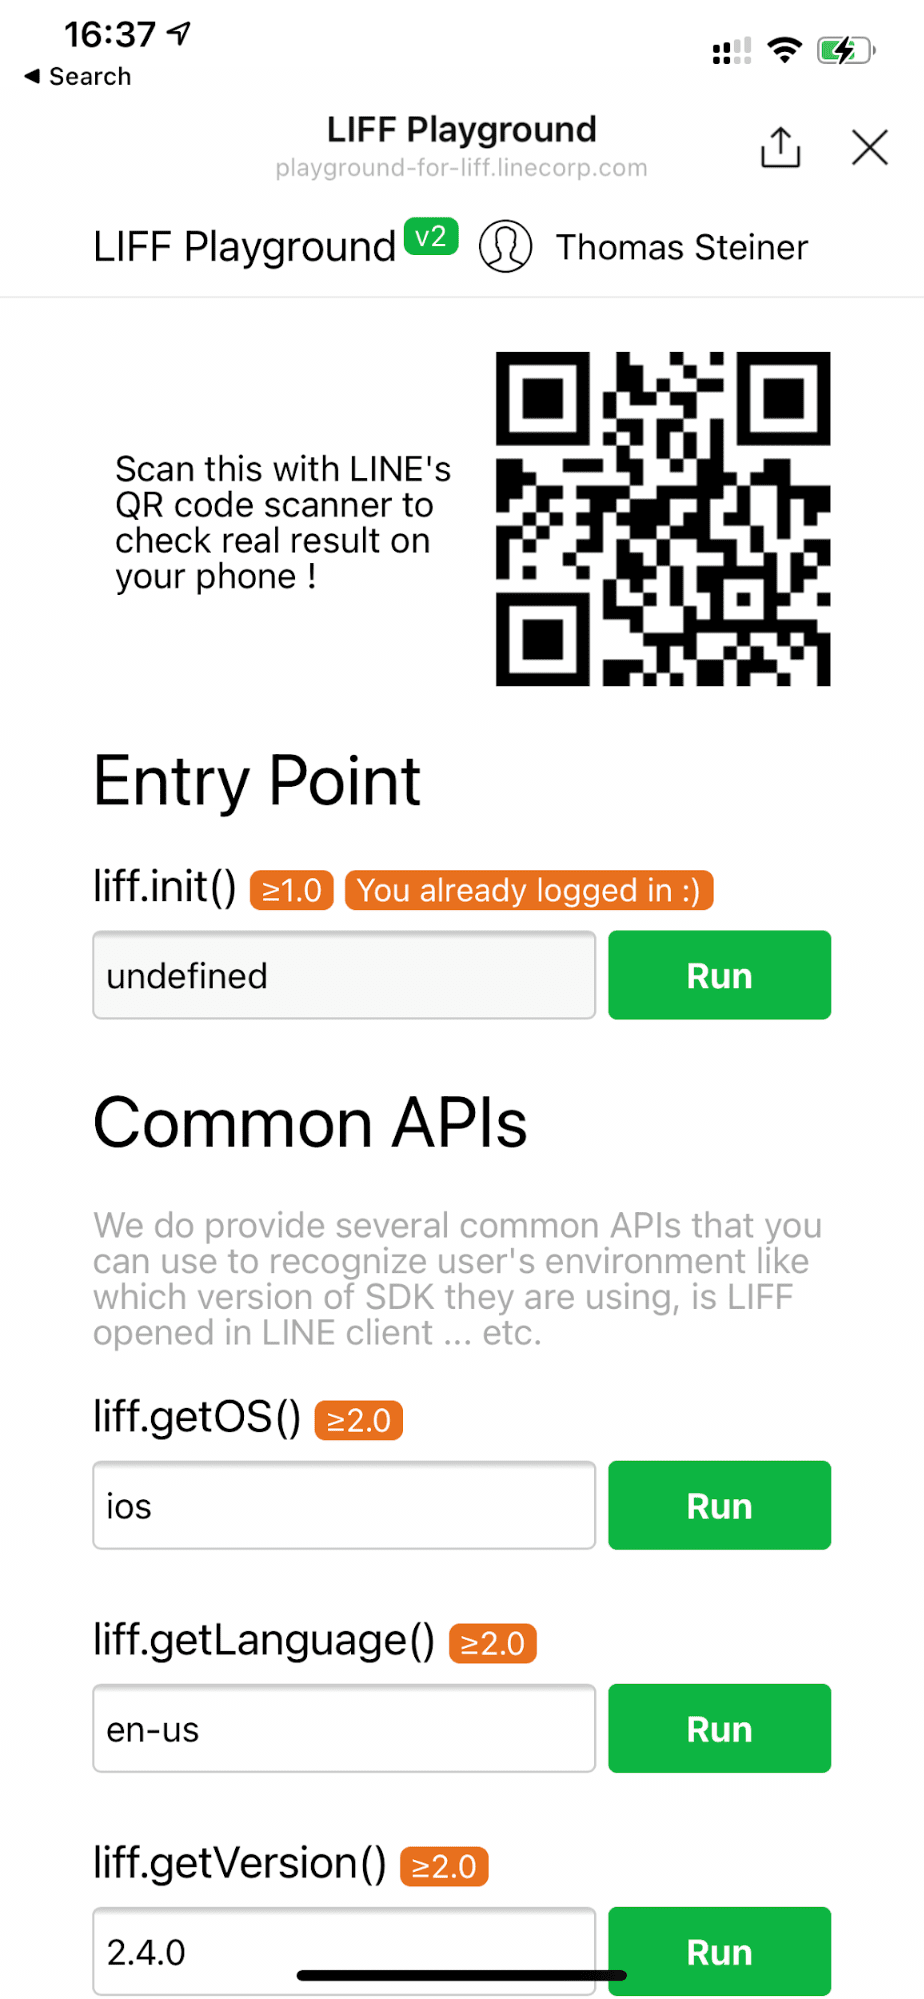 L&#39;app demo LINE Playground in esecuzione su un dispositivo iOS che mostra &quot;liff.getOS()&quot; che restituisce &quot;ios&quot;.